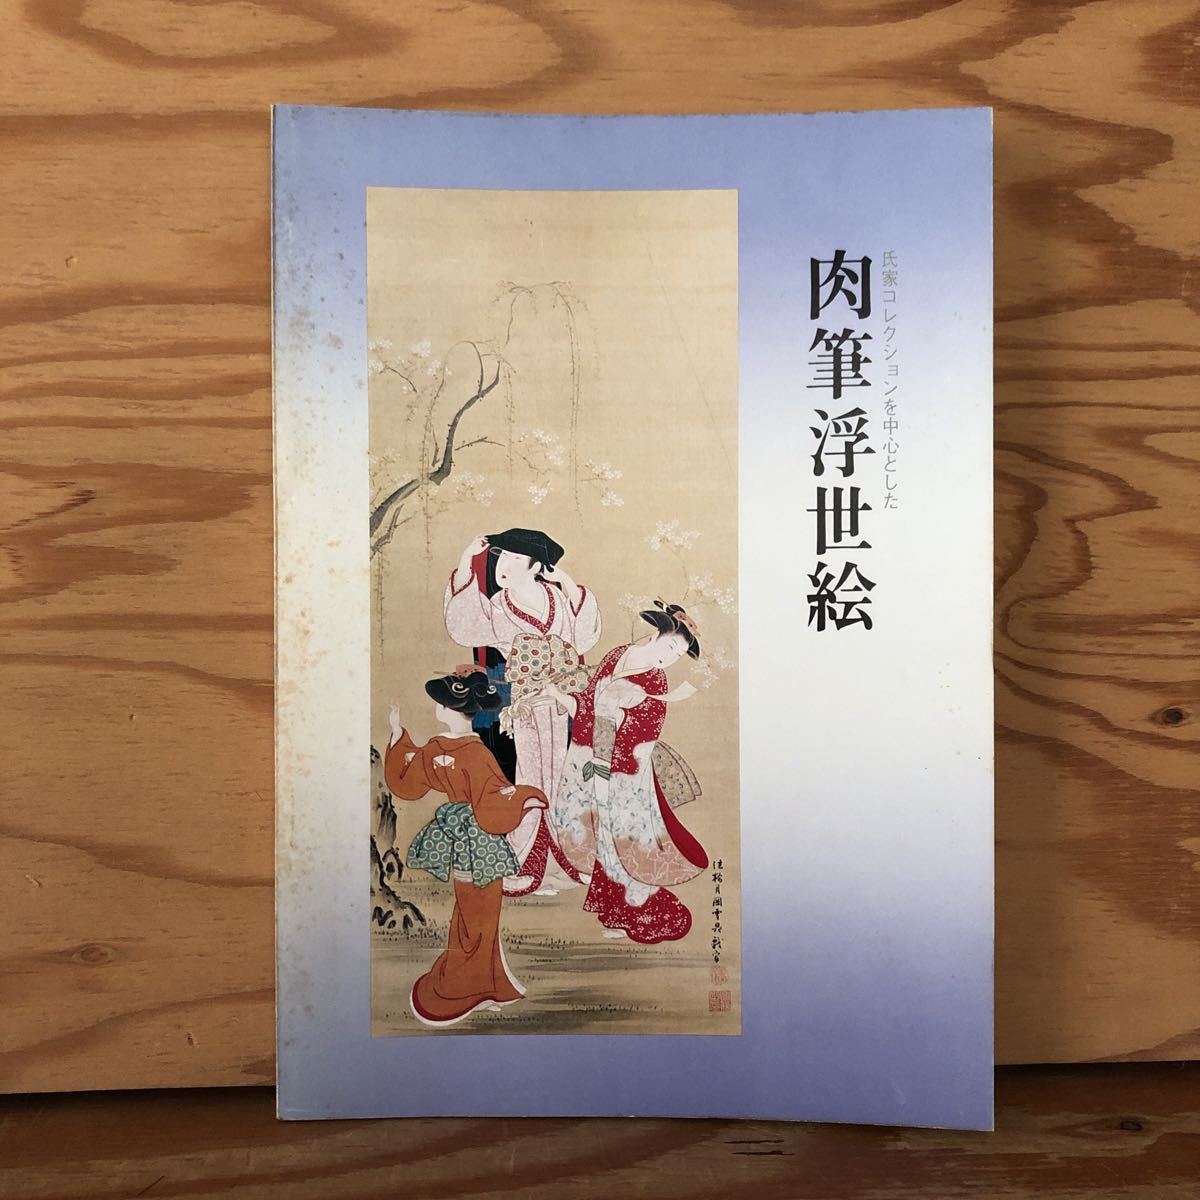 K2ZZ2-230711 Raro [Ukiyo-e dibujado a mano principalmente de la colección Ujiie, 1976] Dos bellezas con flores de cerezo y un novio borracho, cuadro, Libro de arte, colección de obras, Libro de arte